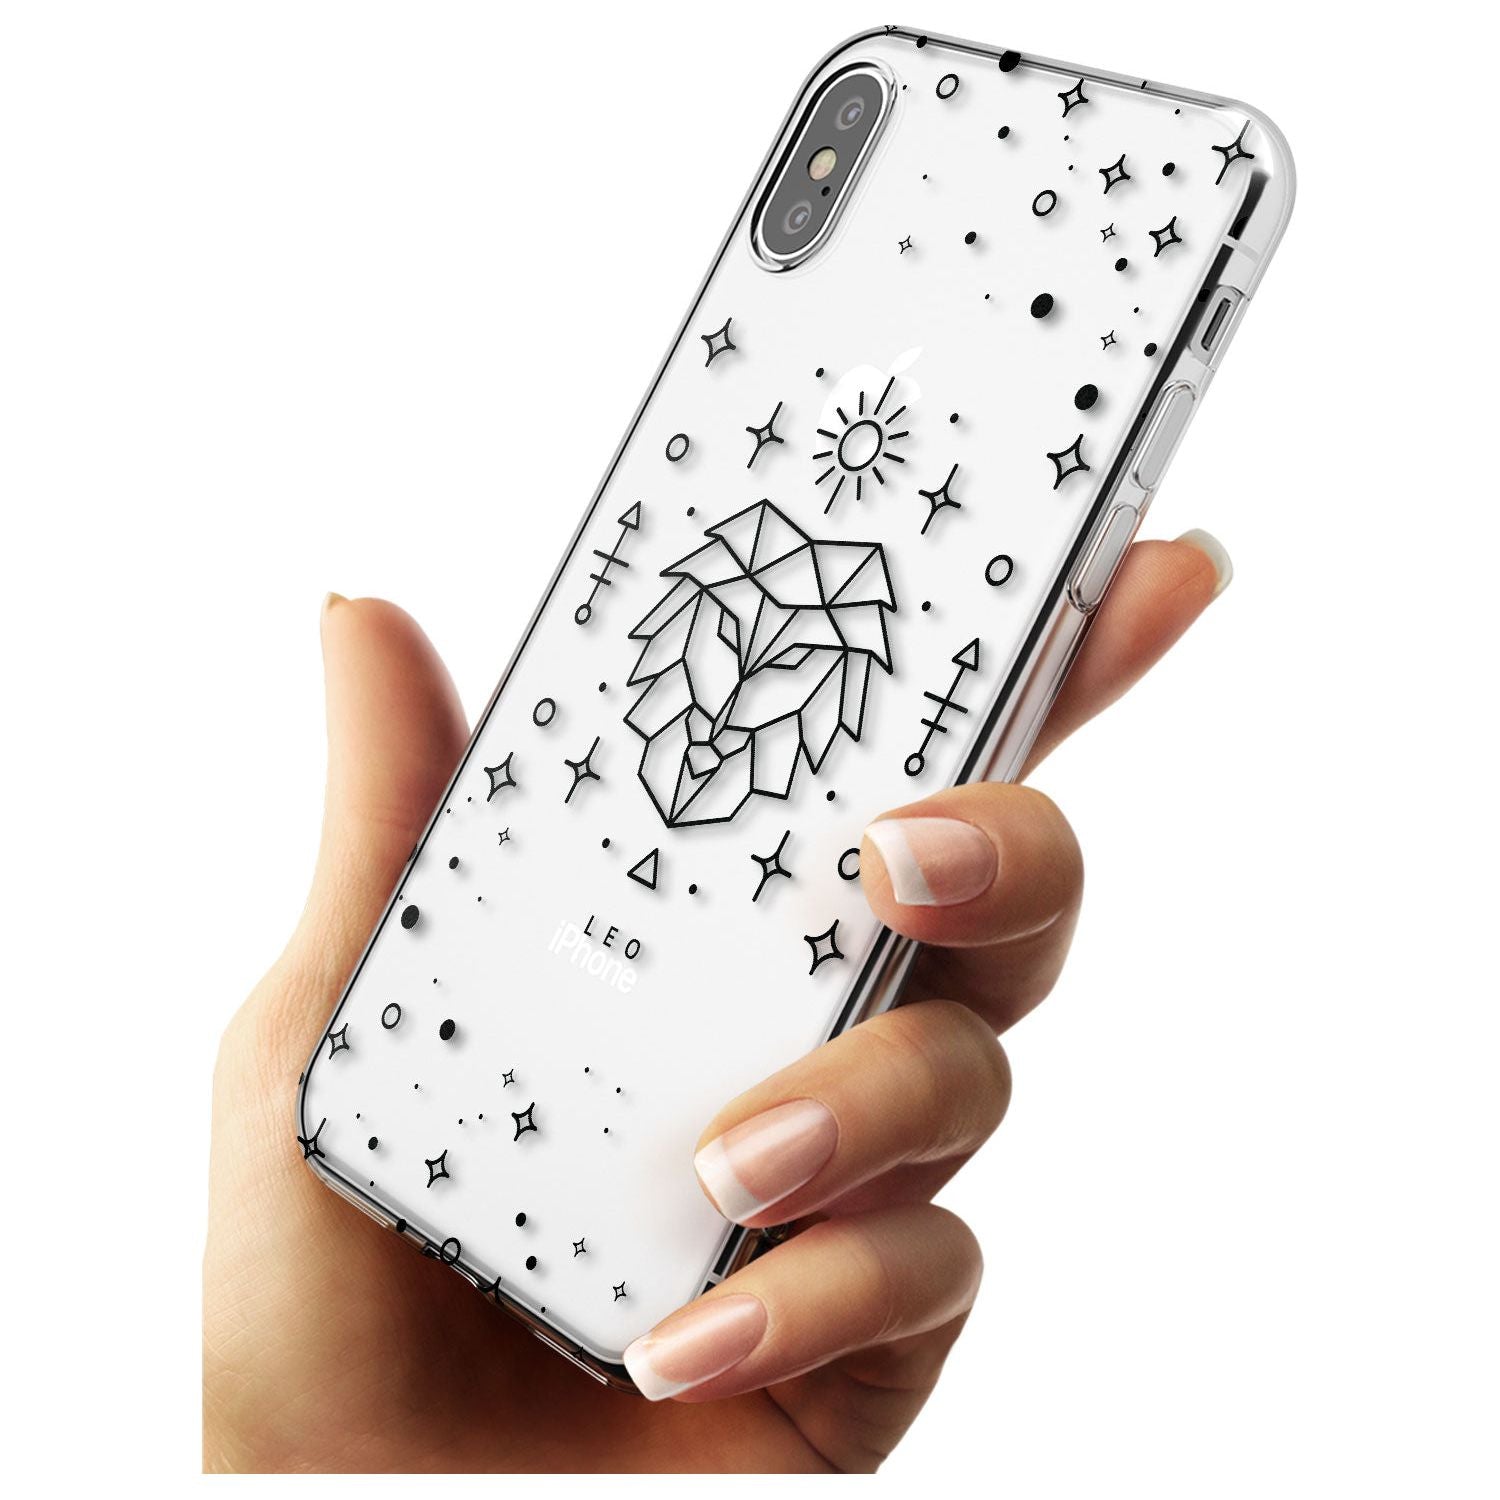 Leo Emblem - Transparent Design Slim TPU Phone Case Warehouse X XS Max XR